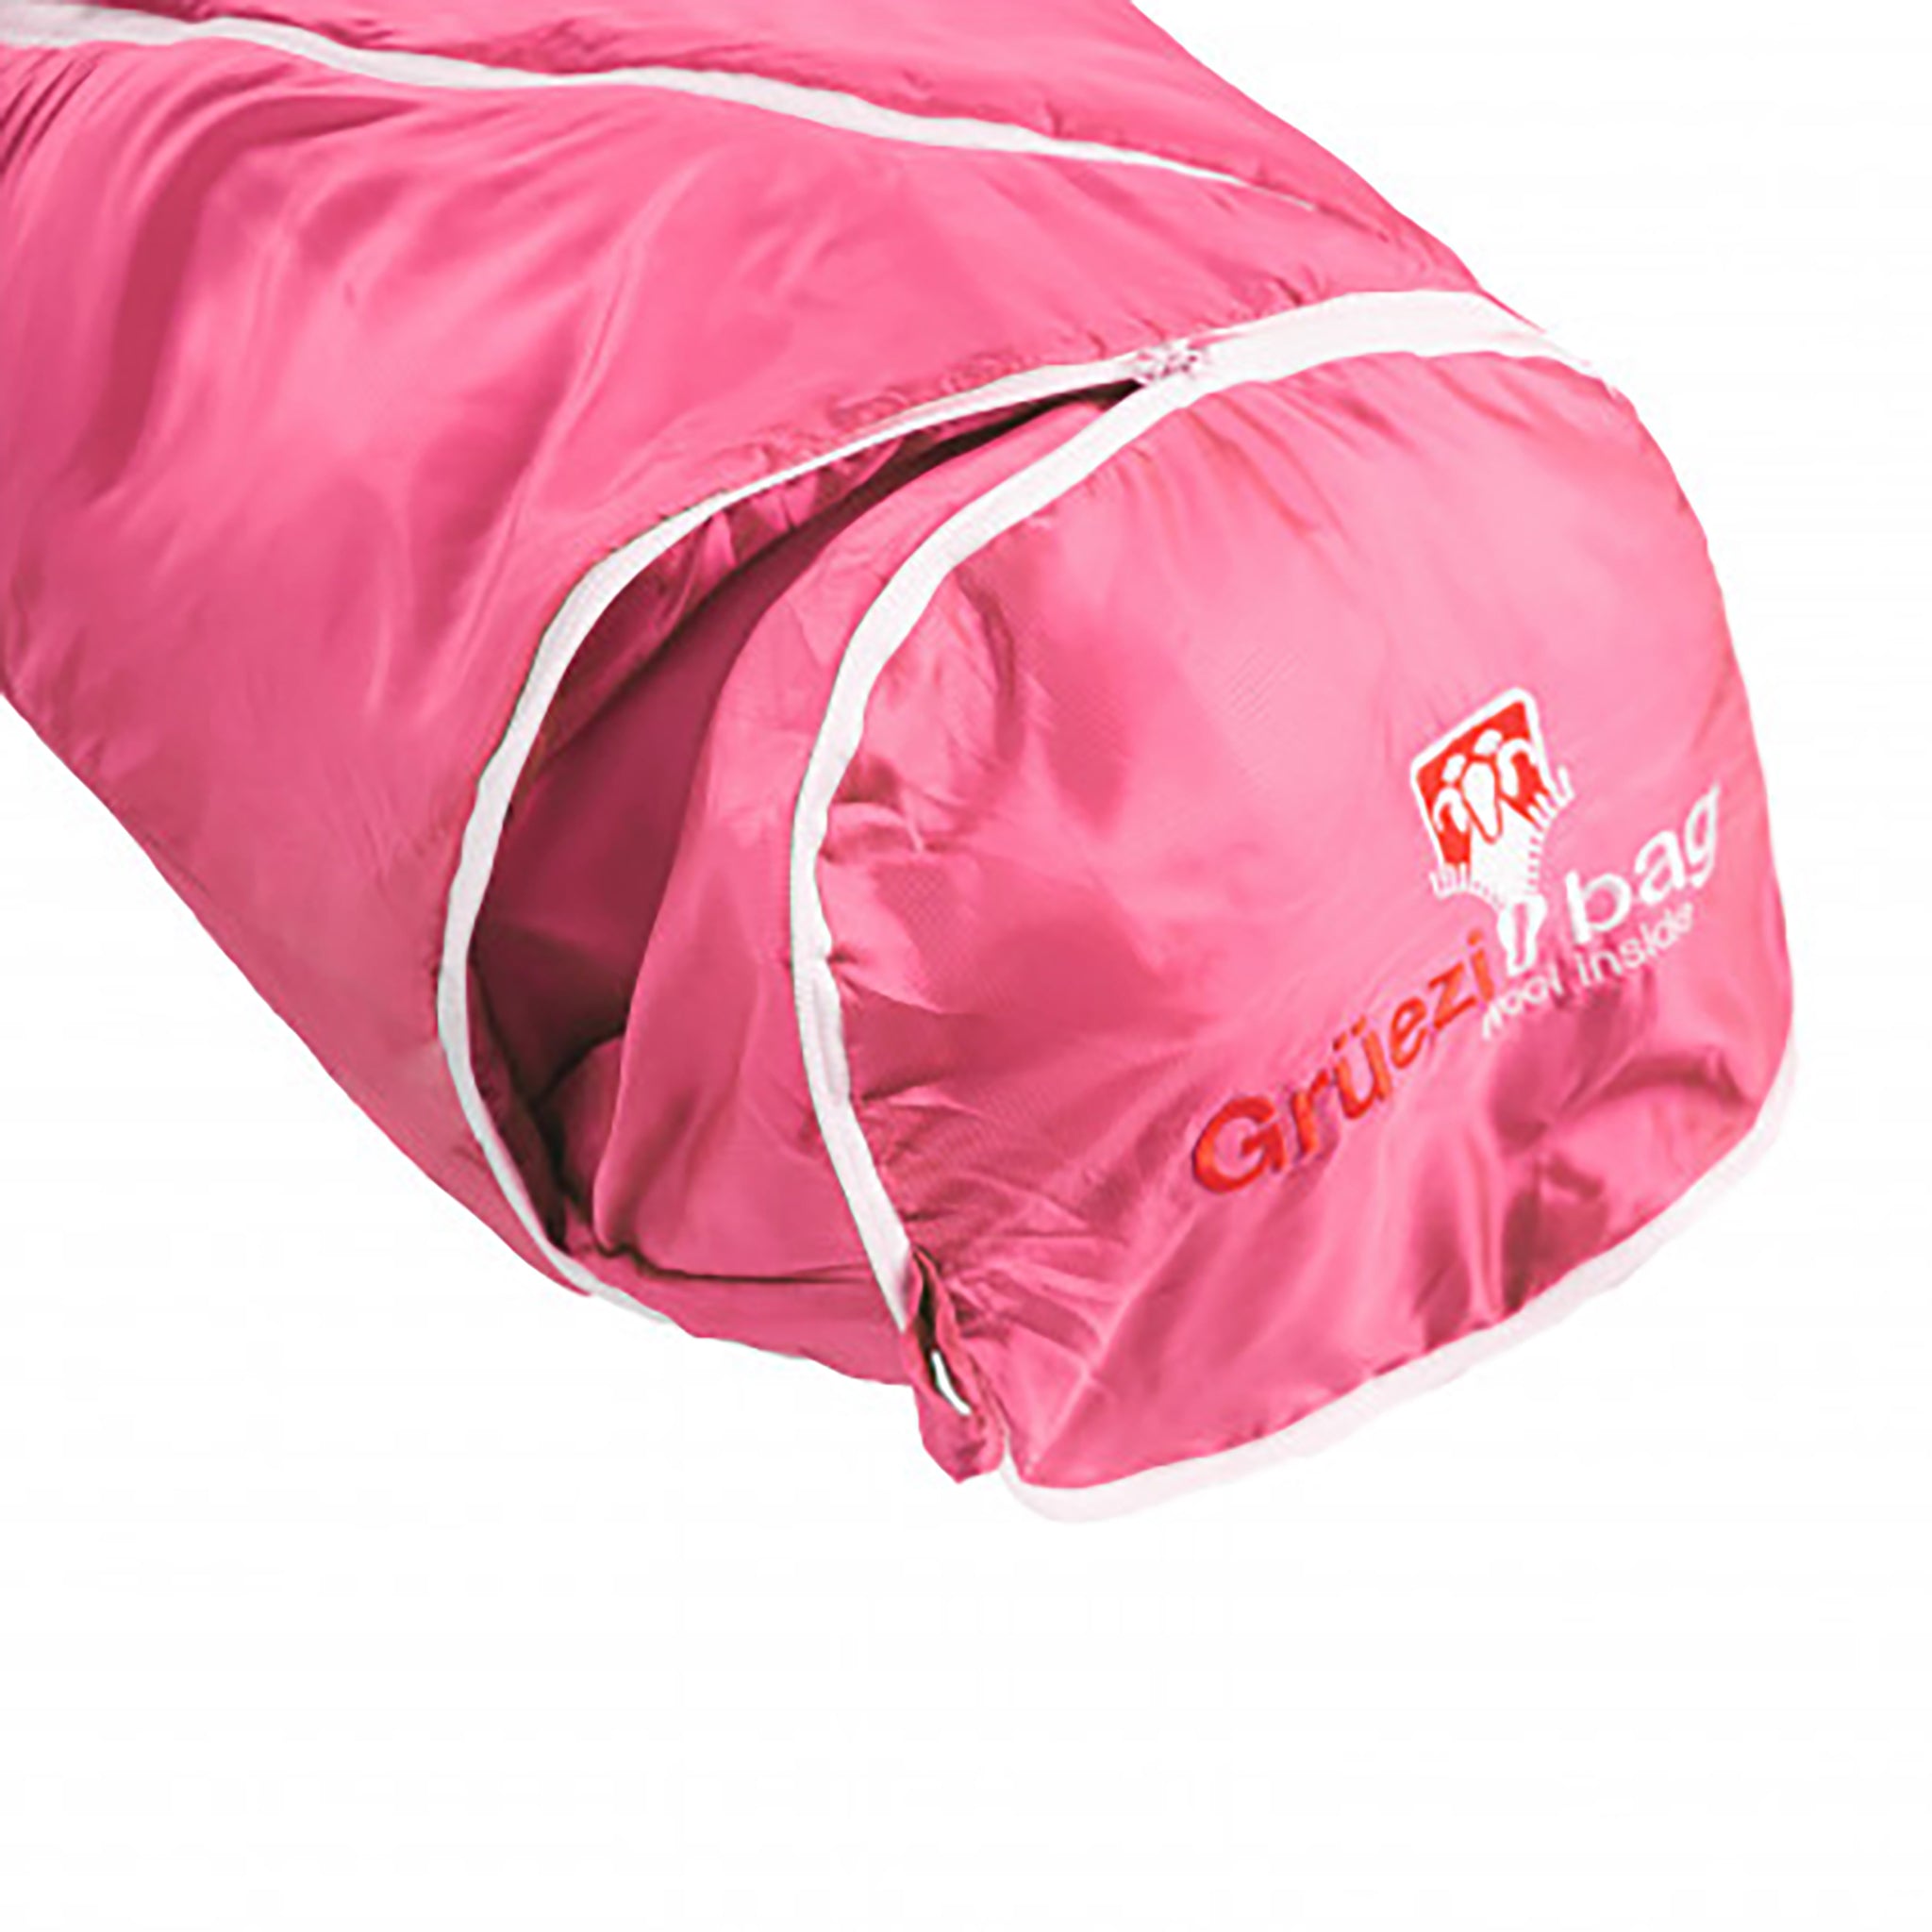 Grüezi Wool Sleeping Bag for Kids